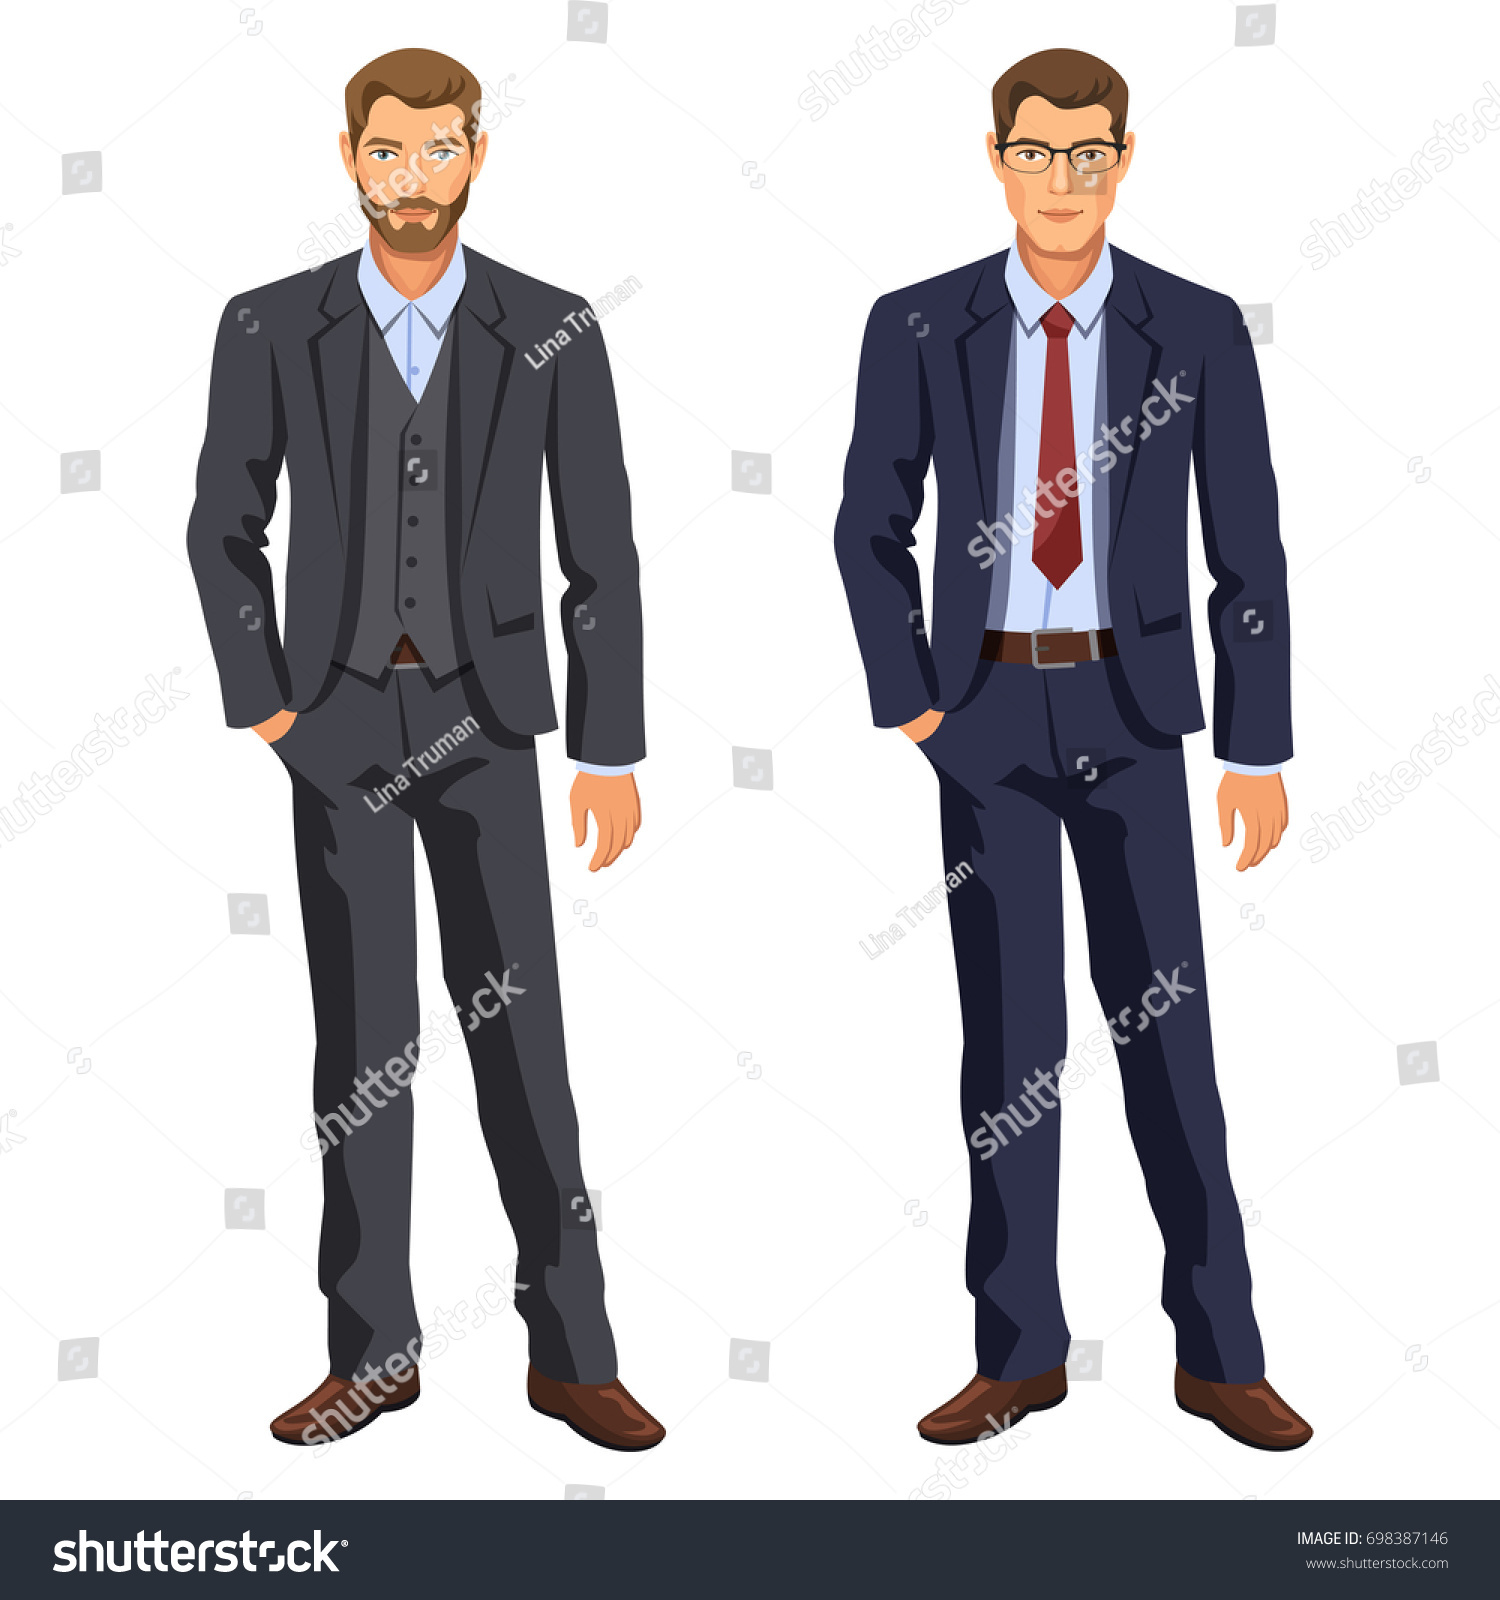 Two Men Man Business Suit Elegant Stock Illustration 698387146 ...